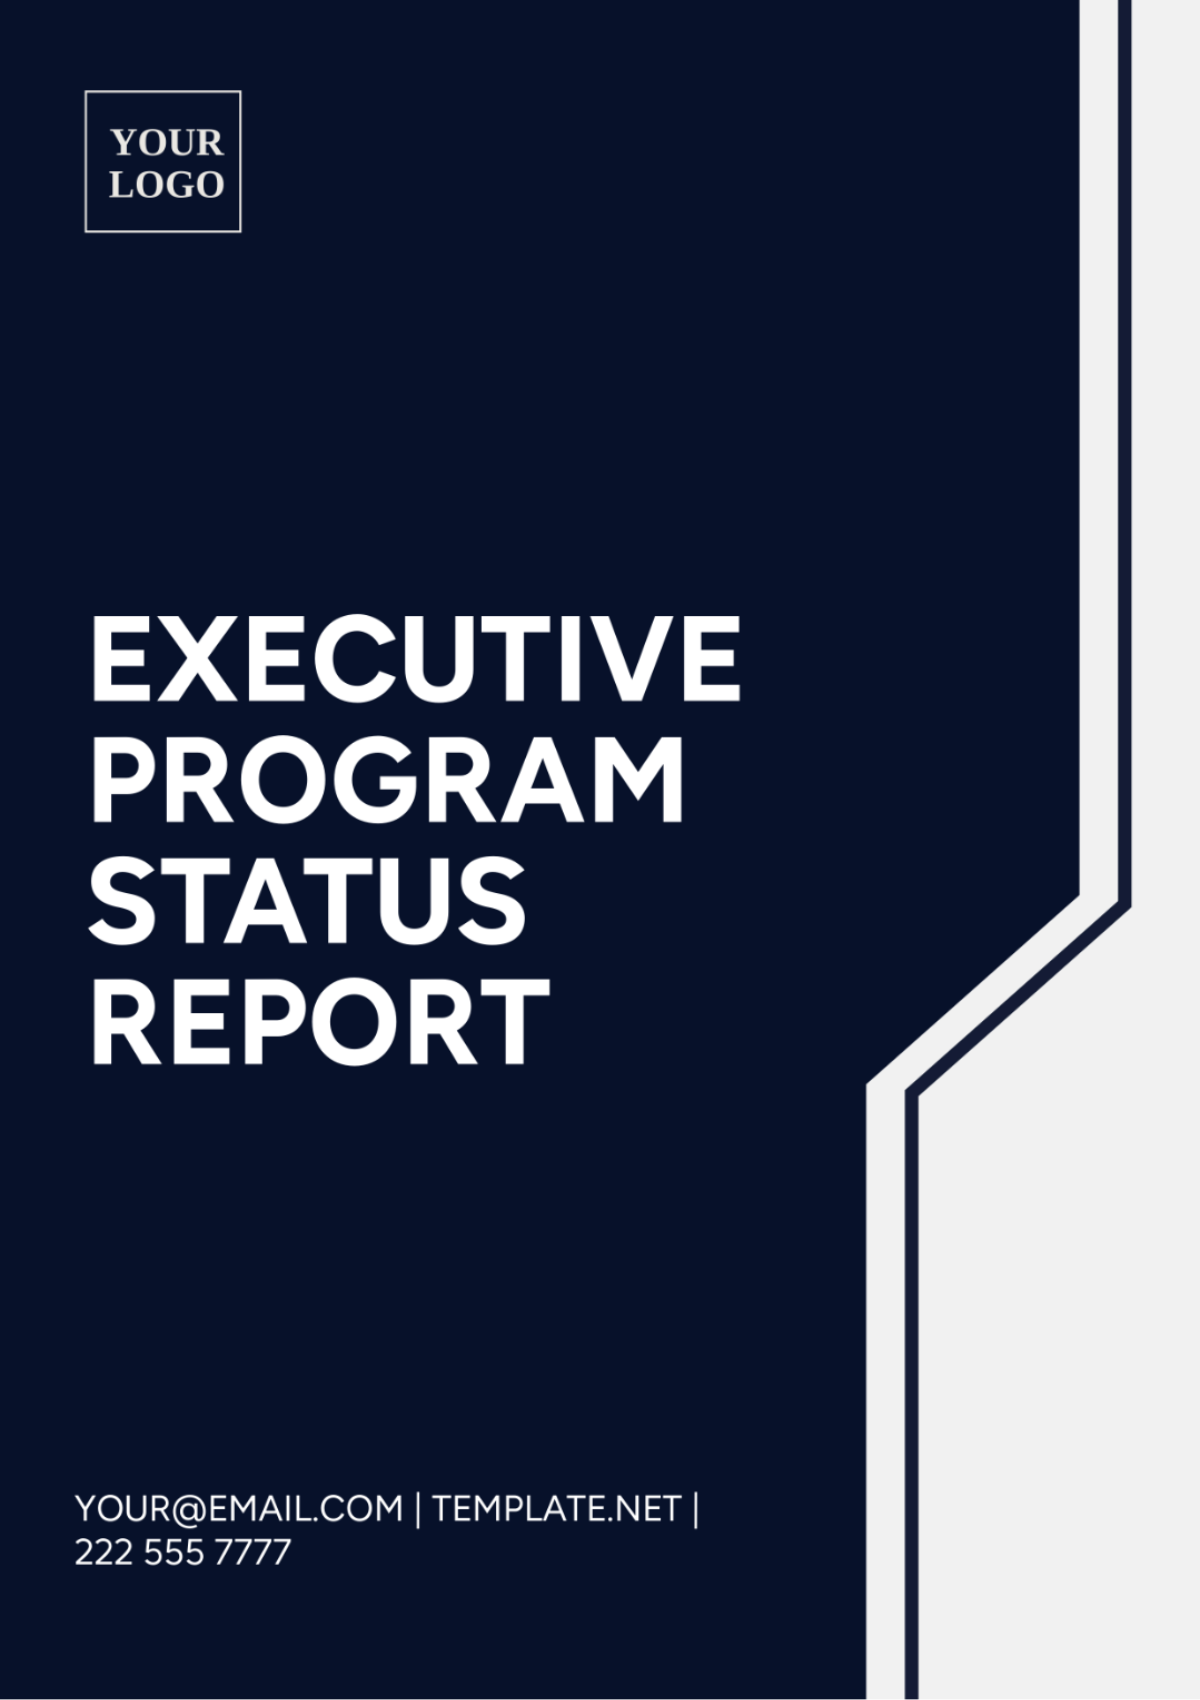 Executive Program Status Report Template